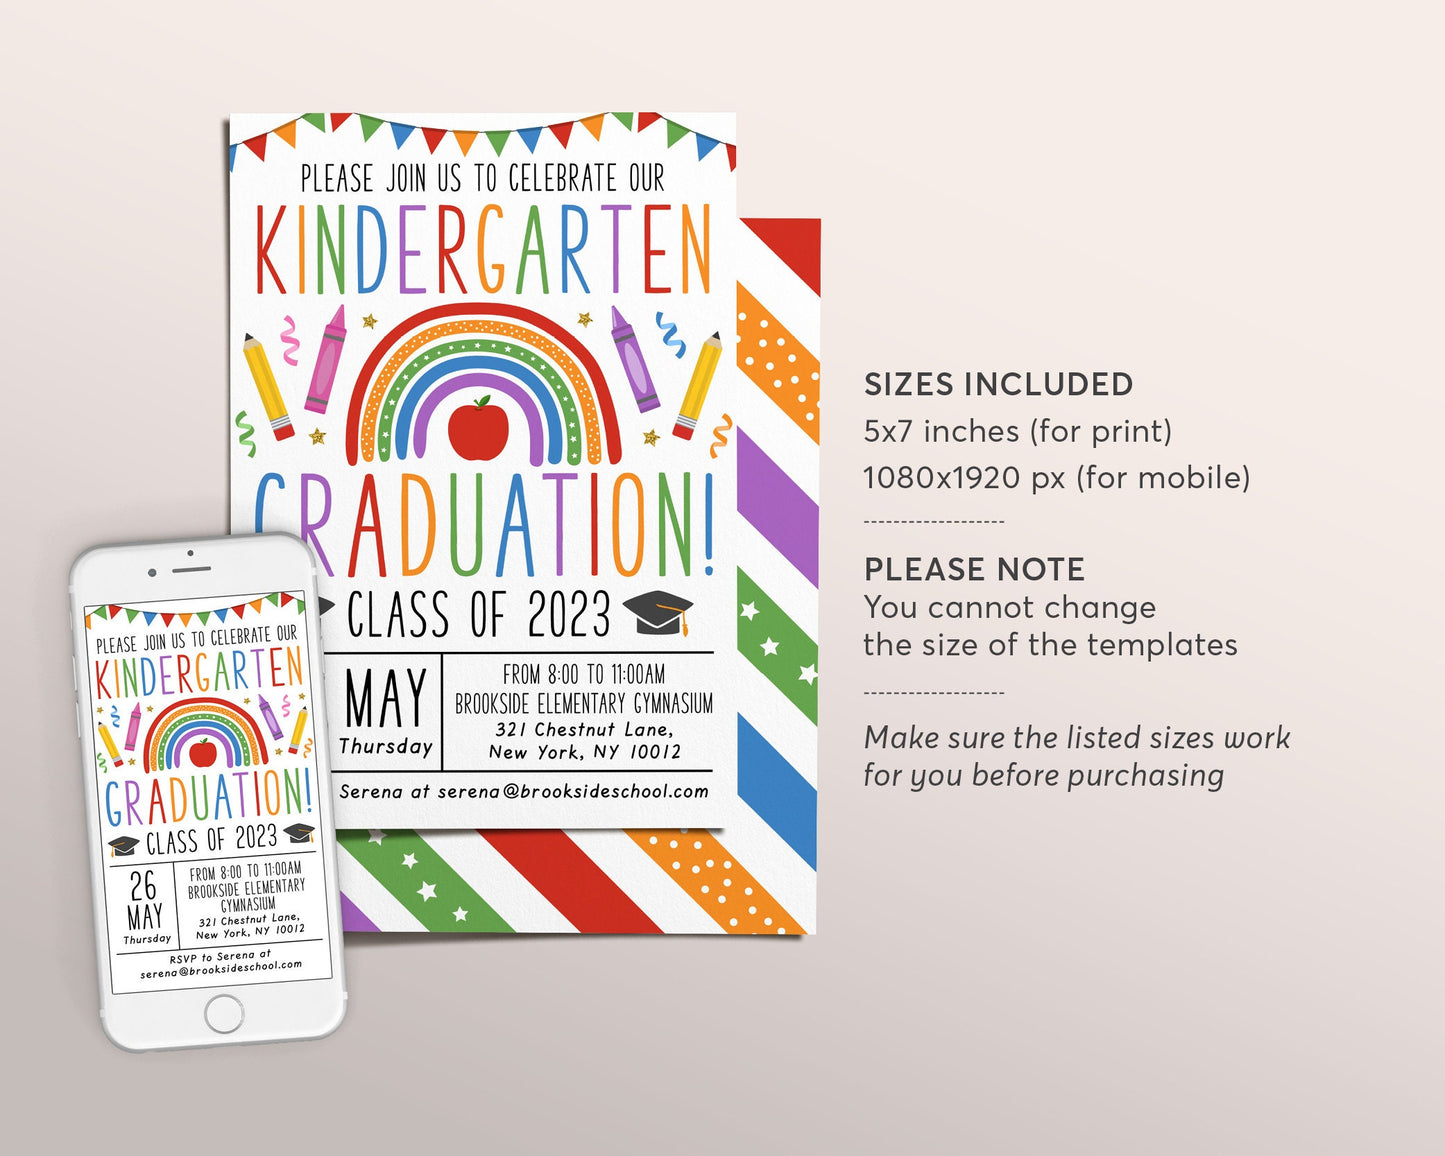 Kindergarten Graduation Invitation Editable Template, Preschool Class Graduation Announcement, Graduation Ceremony Invite Digital Evite